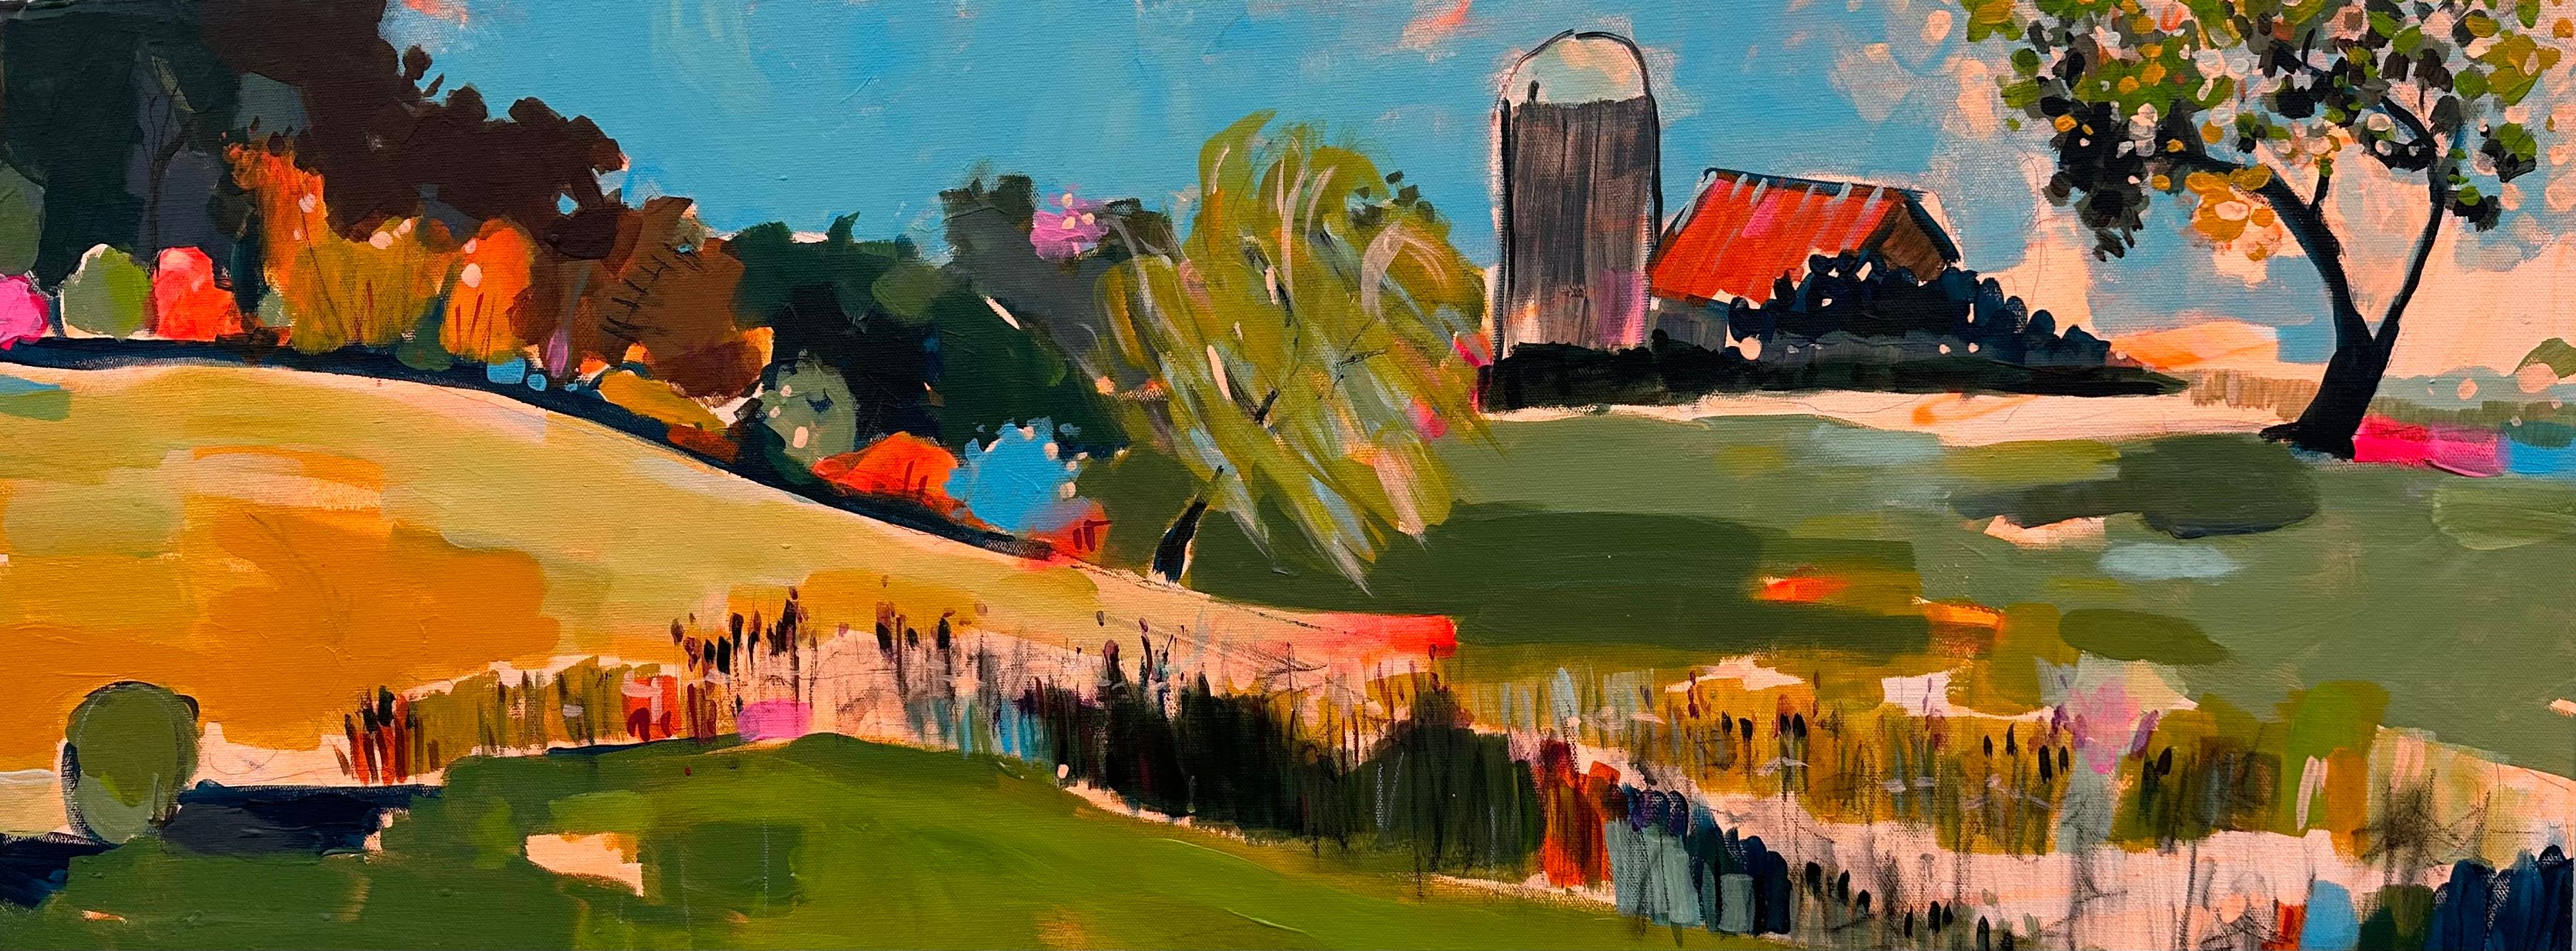 Summertime Rural Farm, Original Painting - Art by Rebecca Klementovich